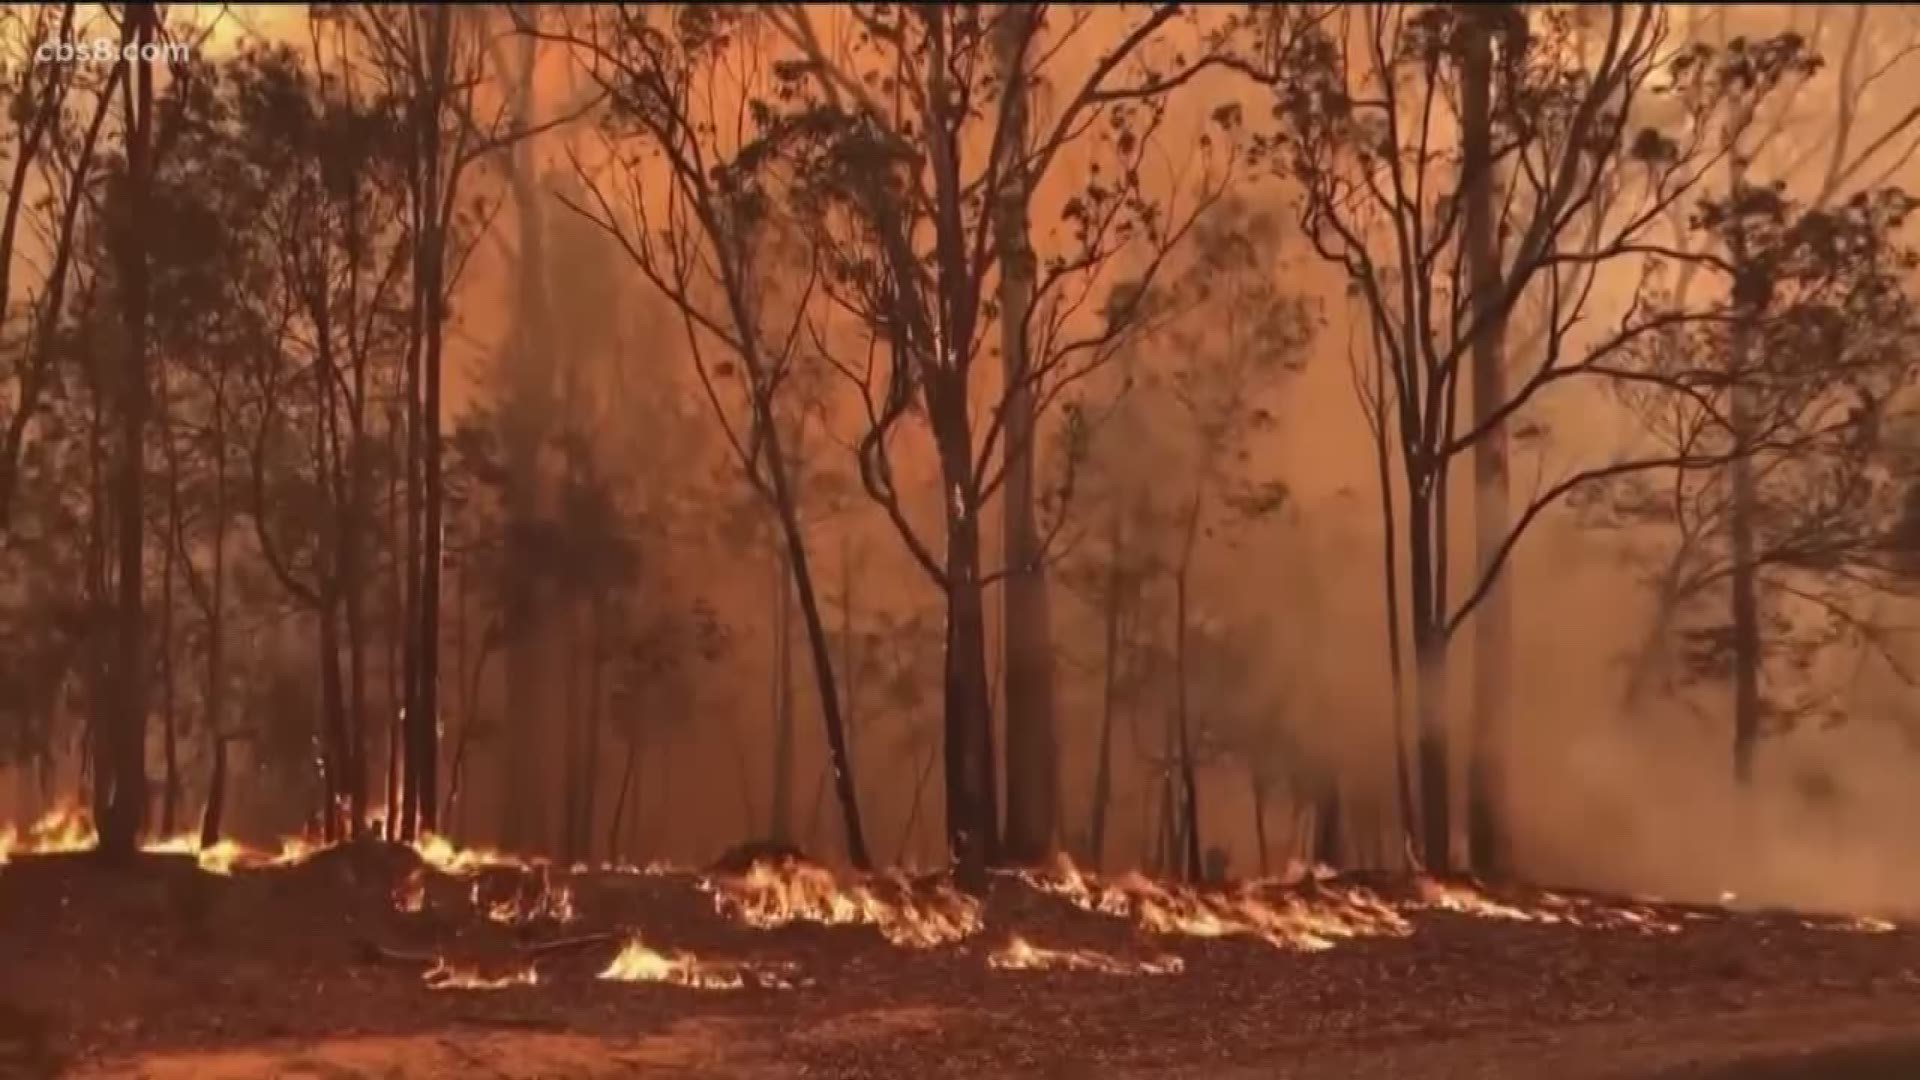 15 million acres of Australia have burnt.